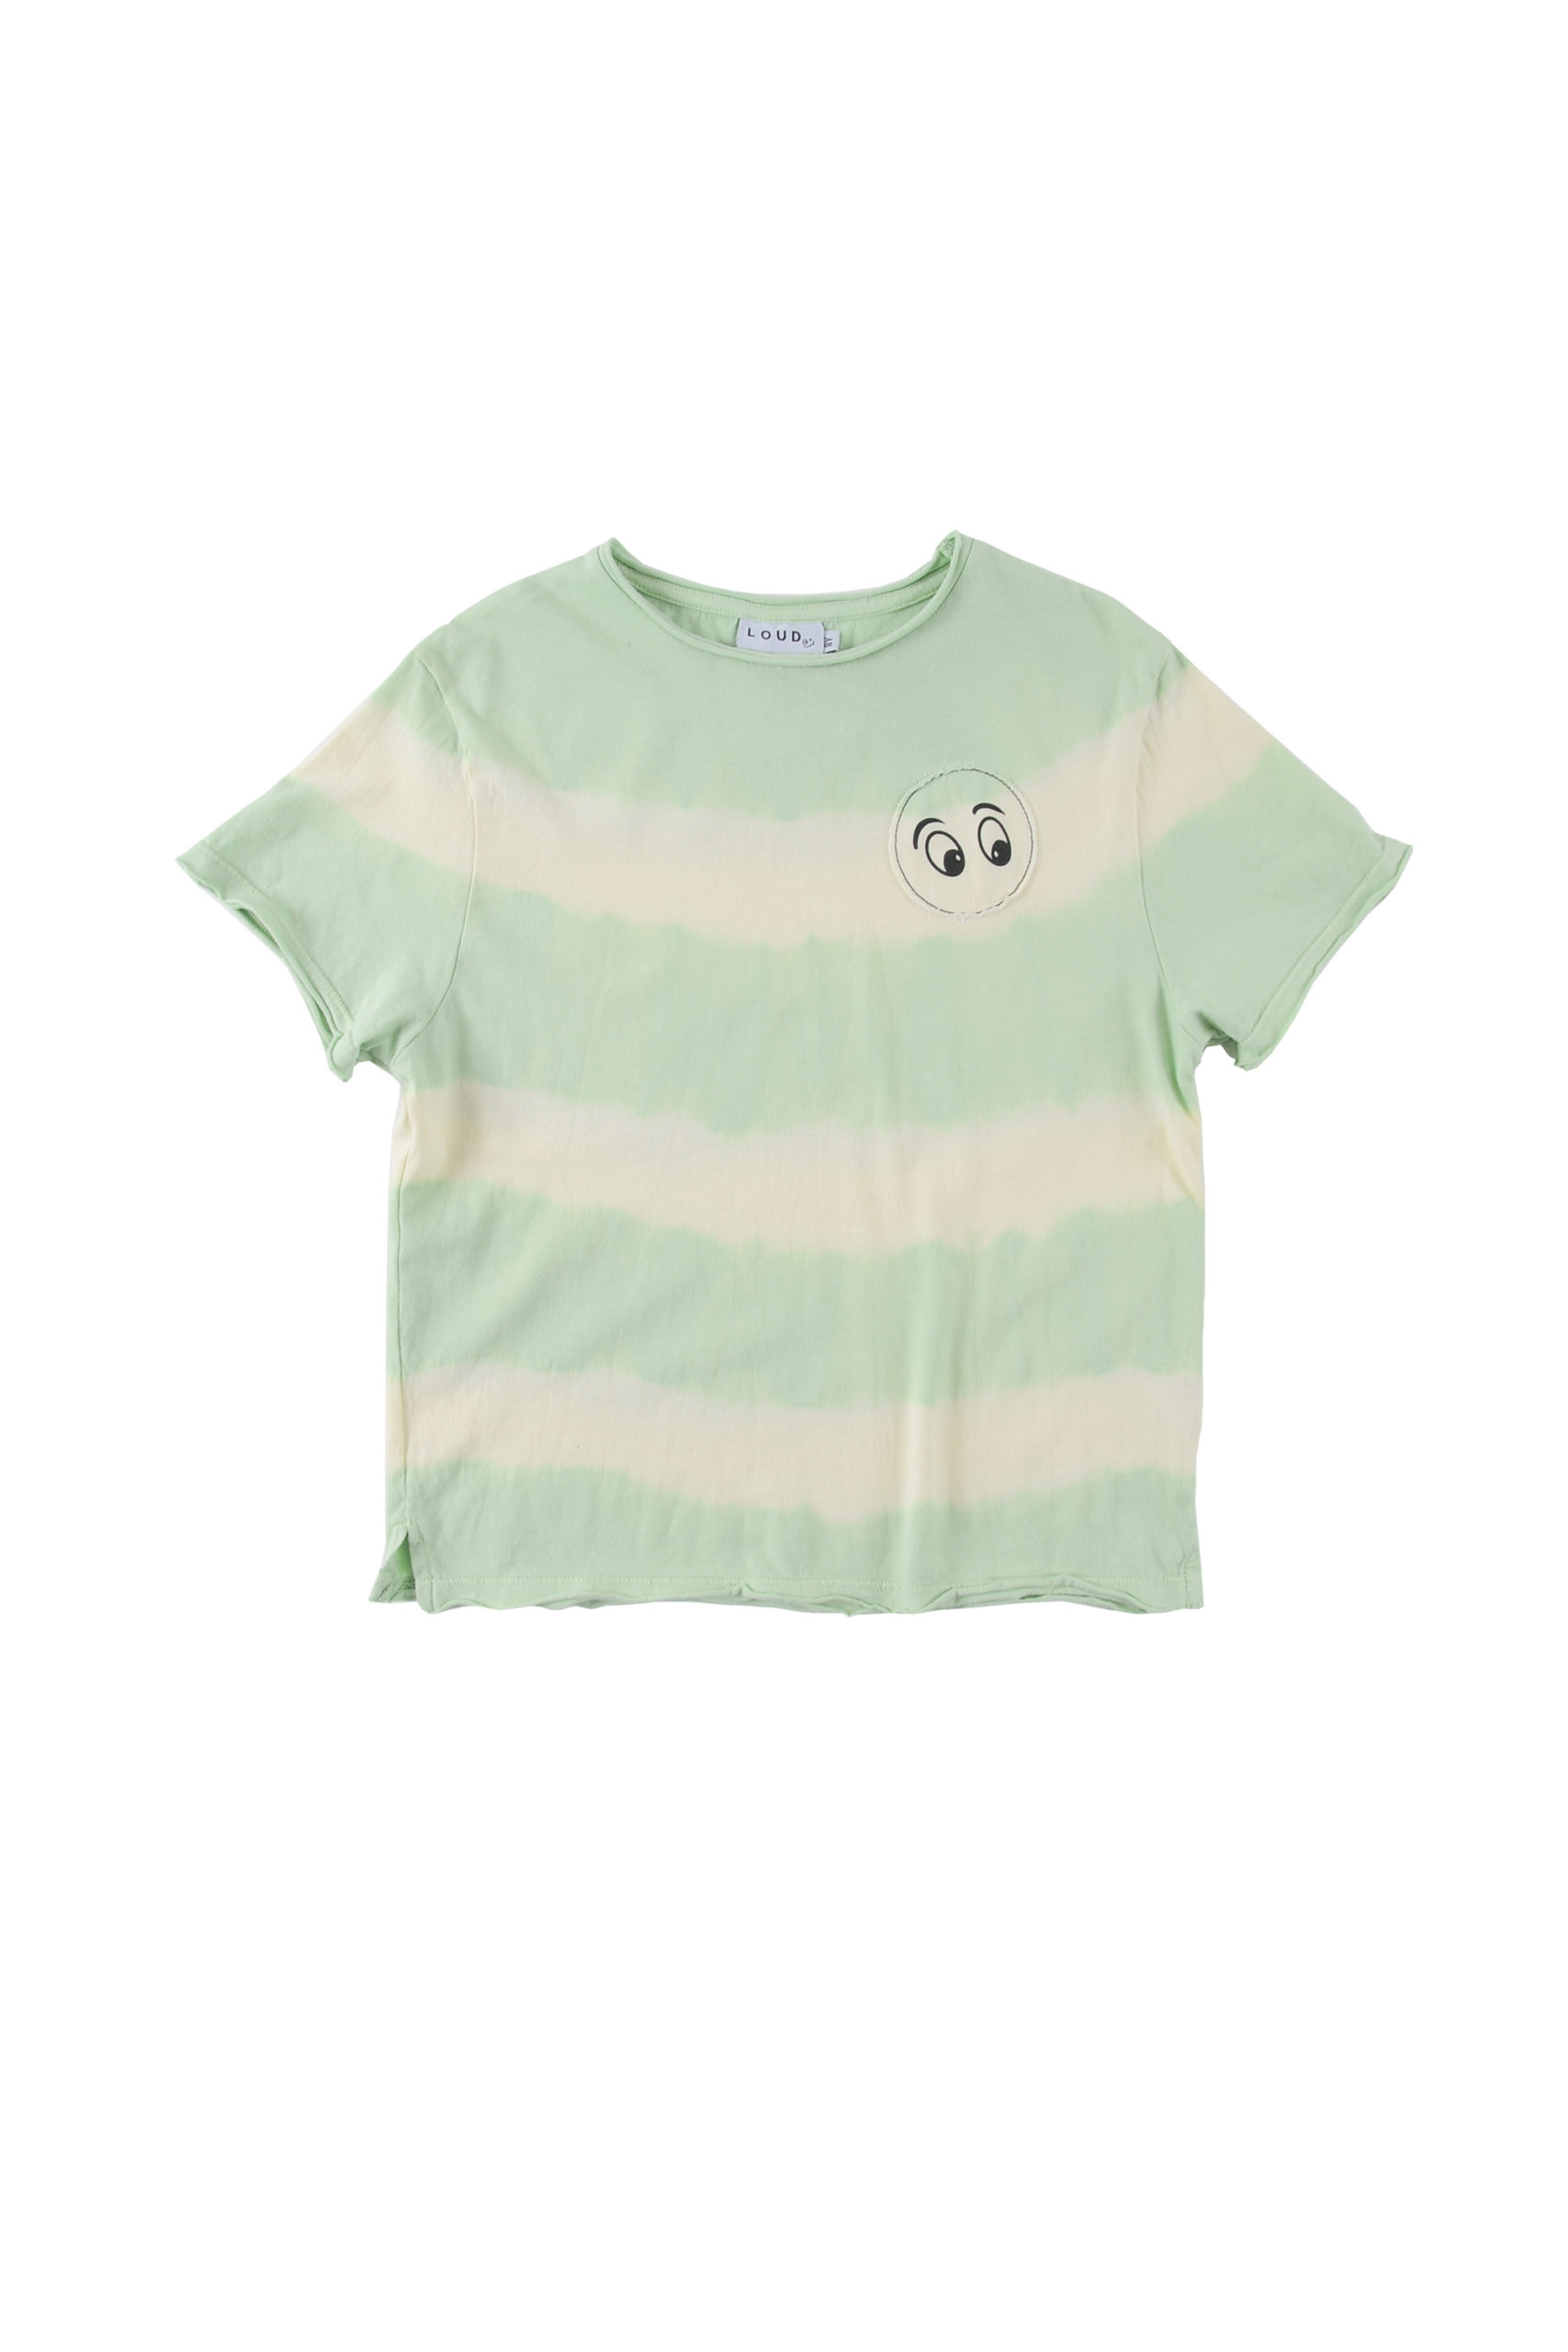 / Pastel Green T-Shirt Regular Fit - Loud Apparel